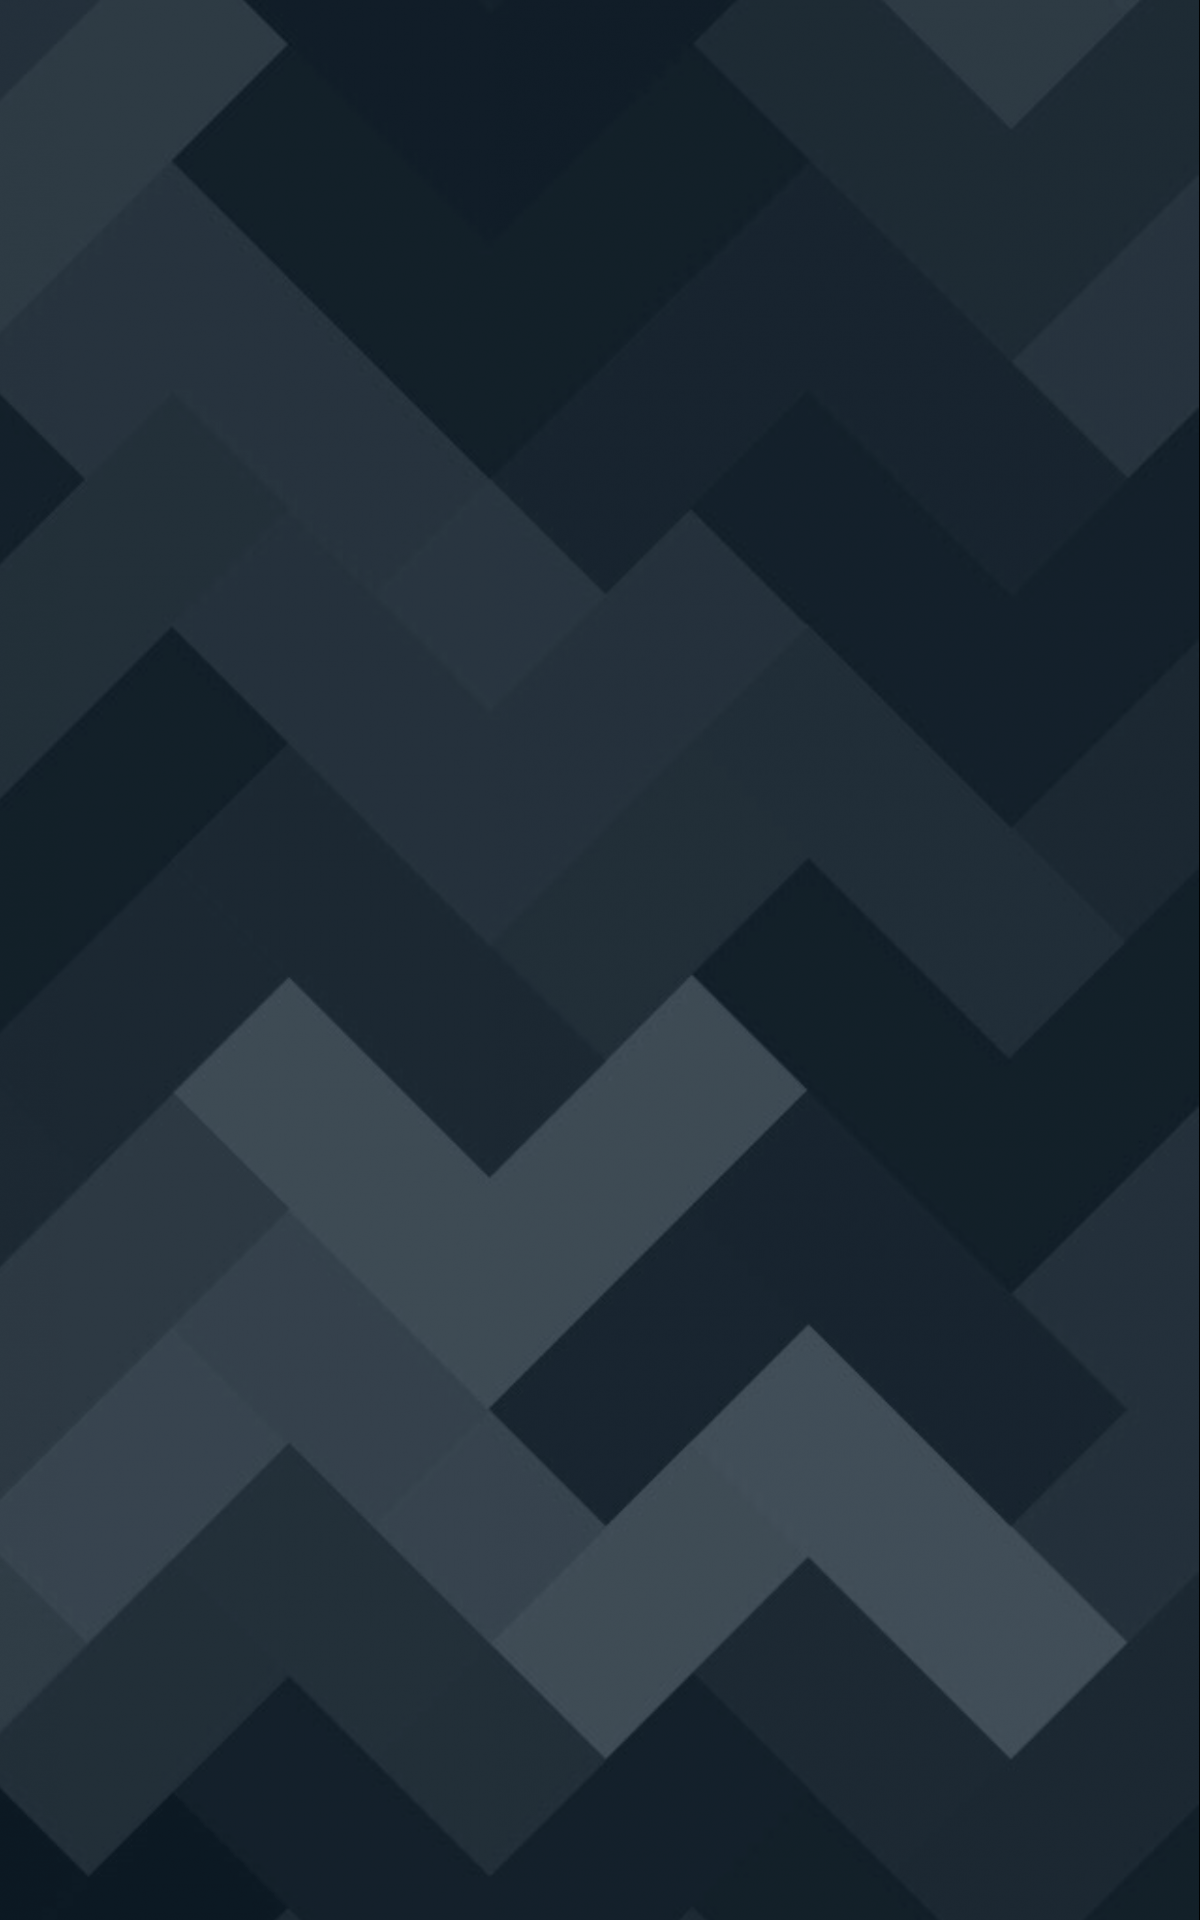 Free download Wallpaper of the week geometric wallpaper